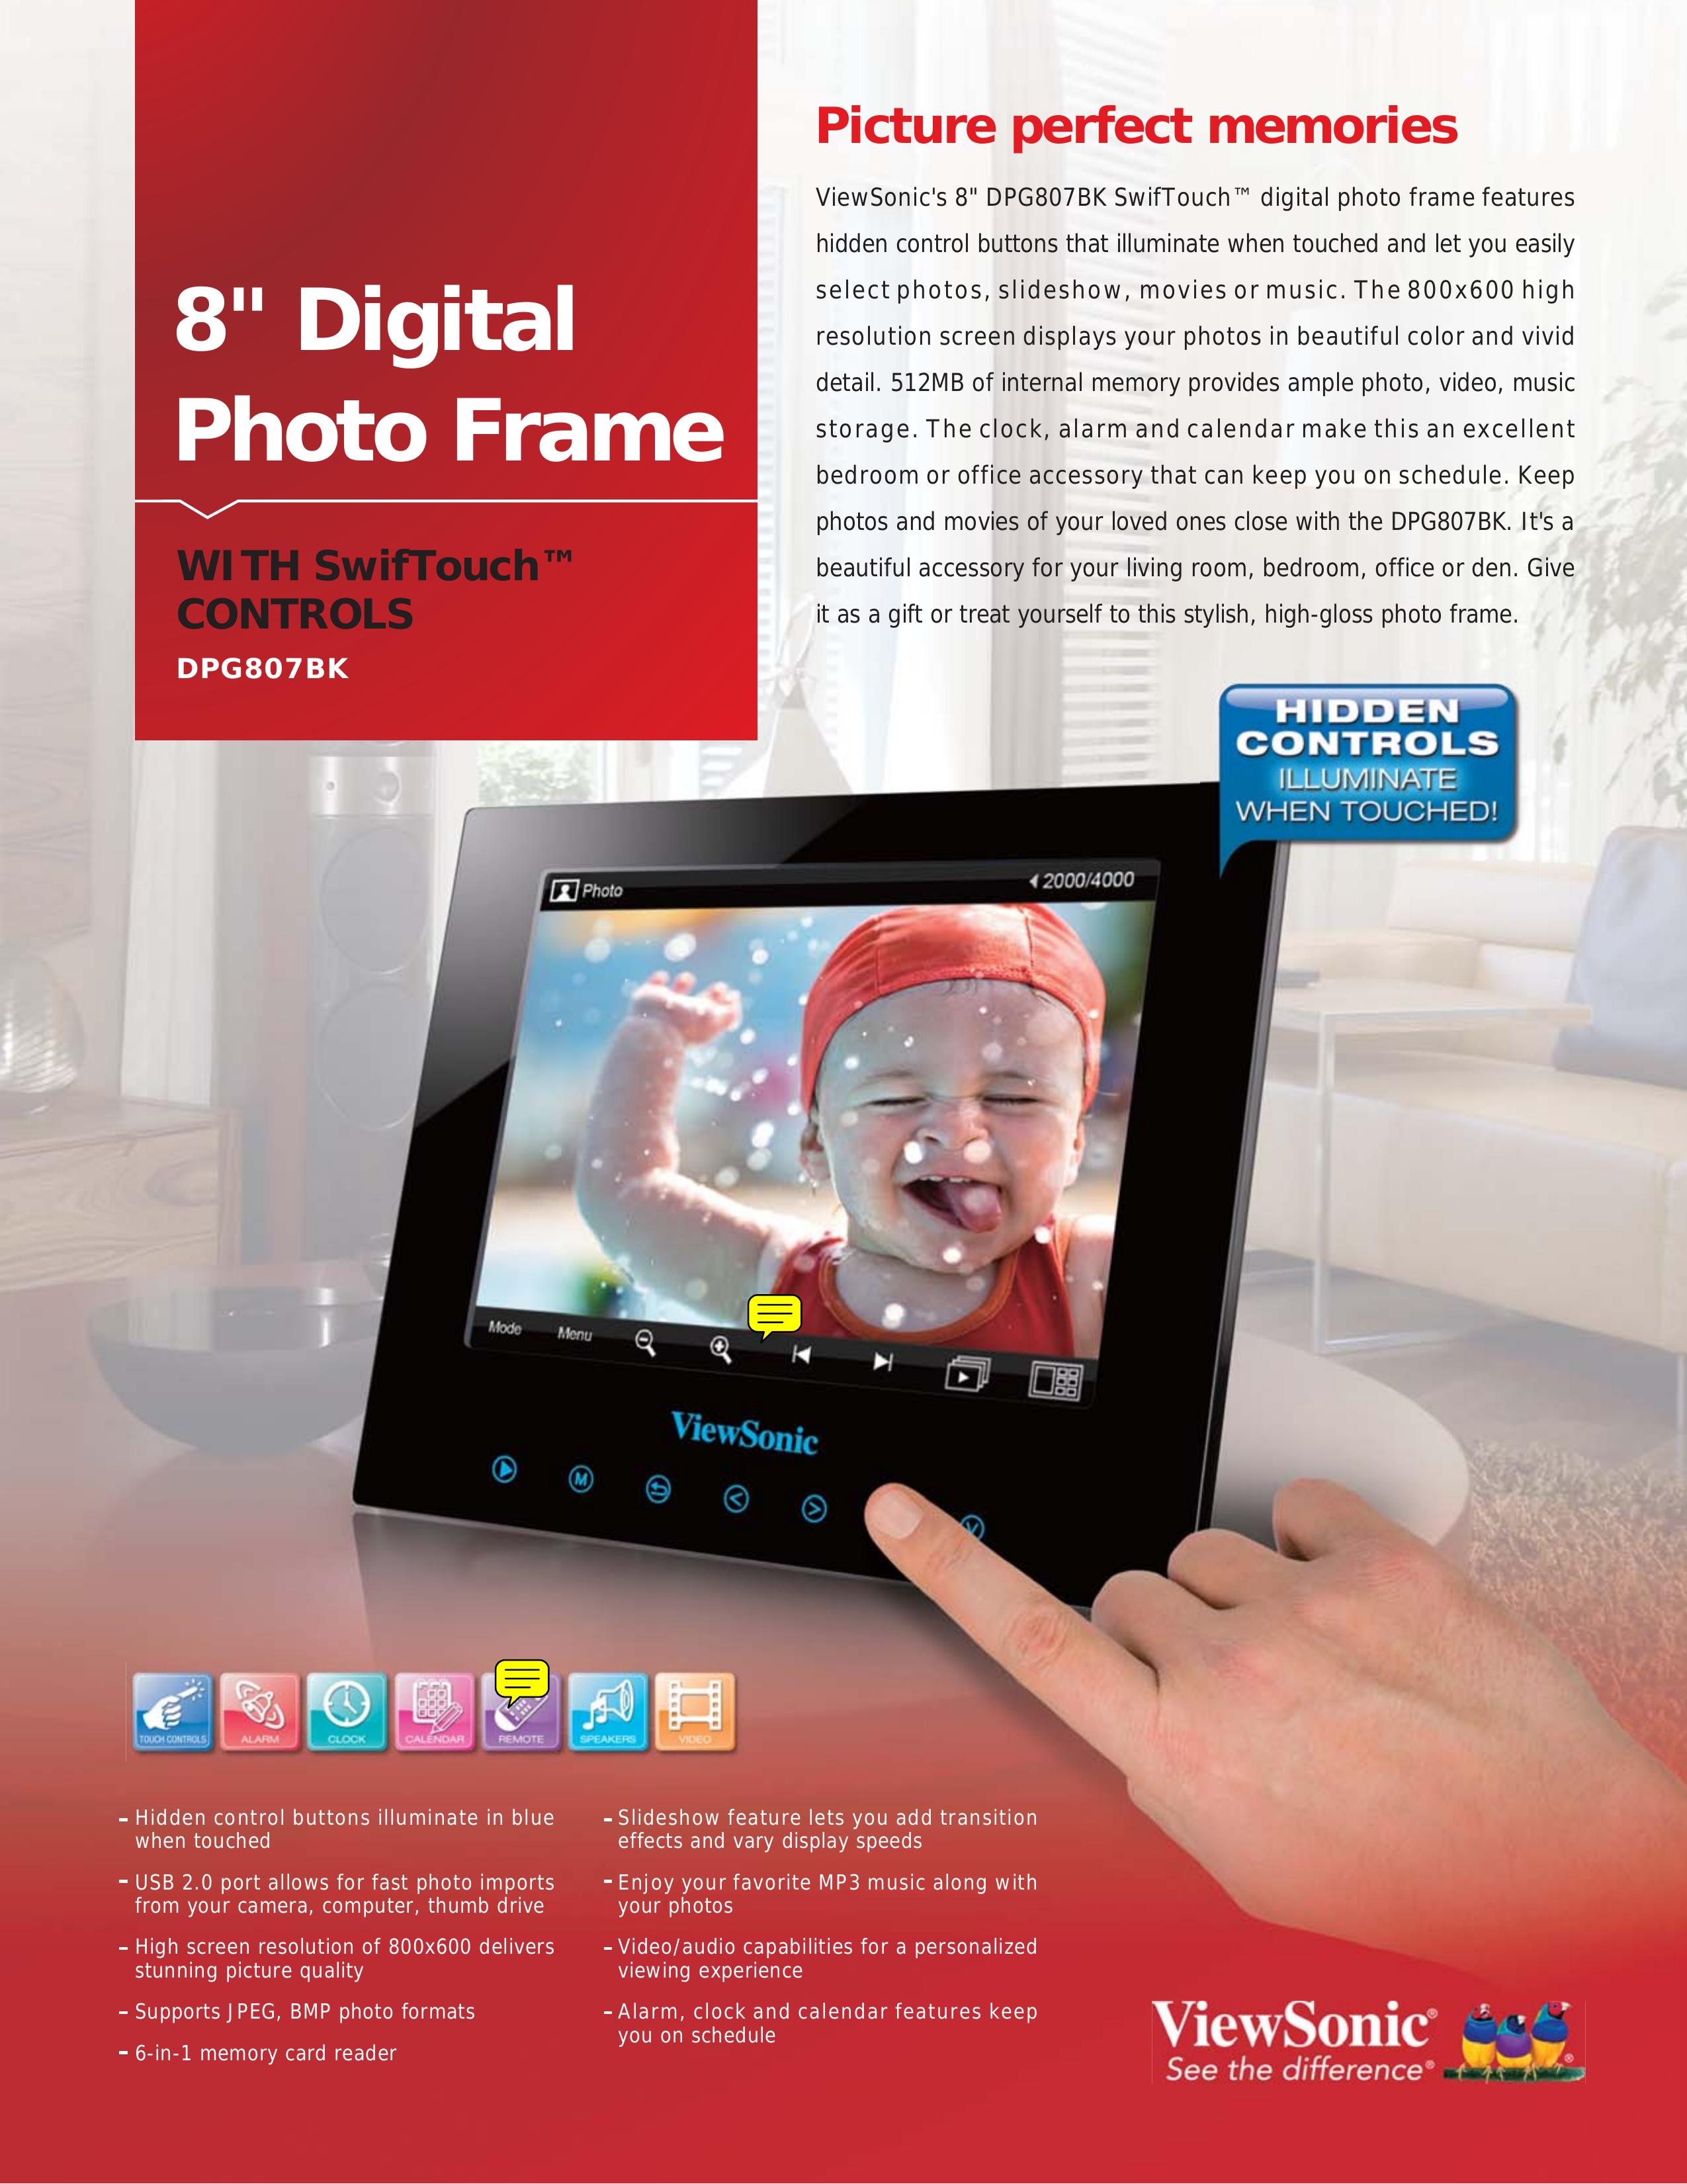 ViewSonic DPG807BK Digital Photo Frame User Manual